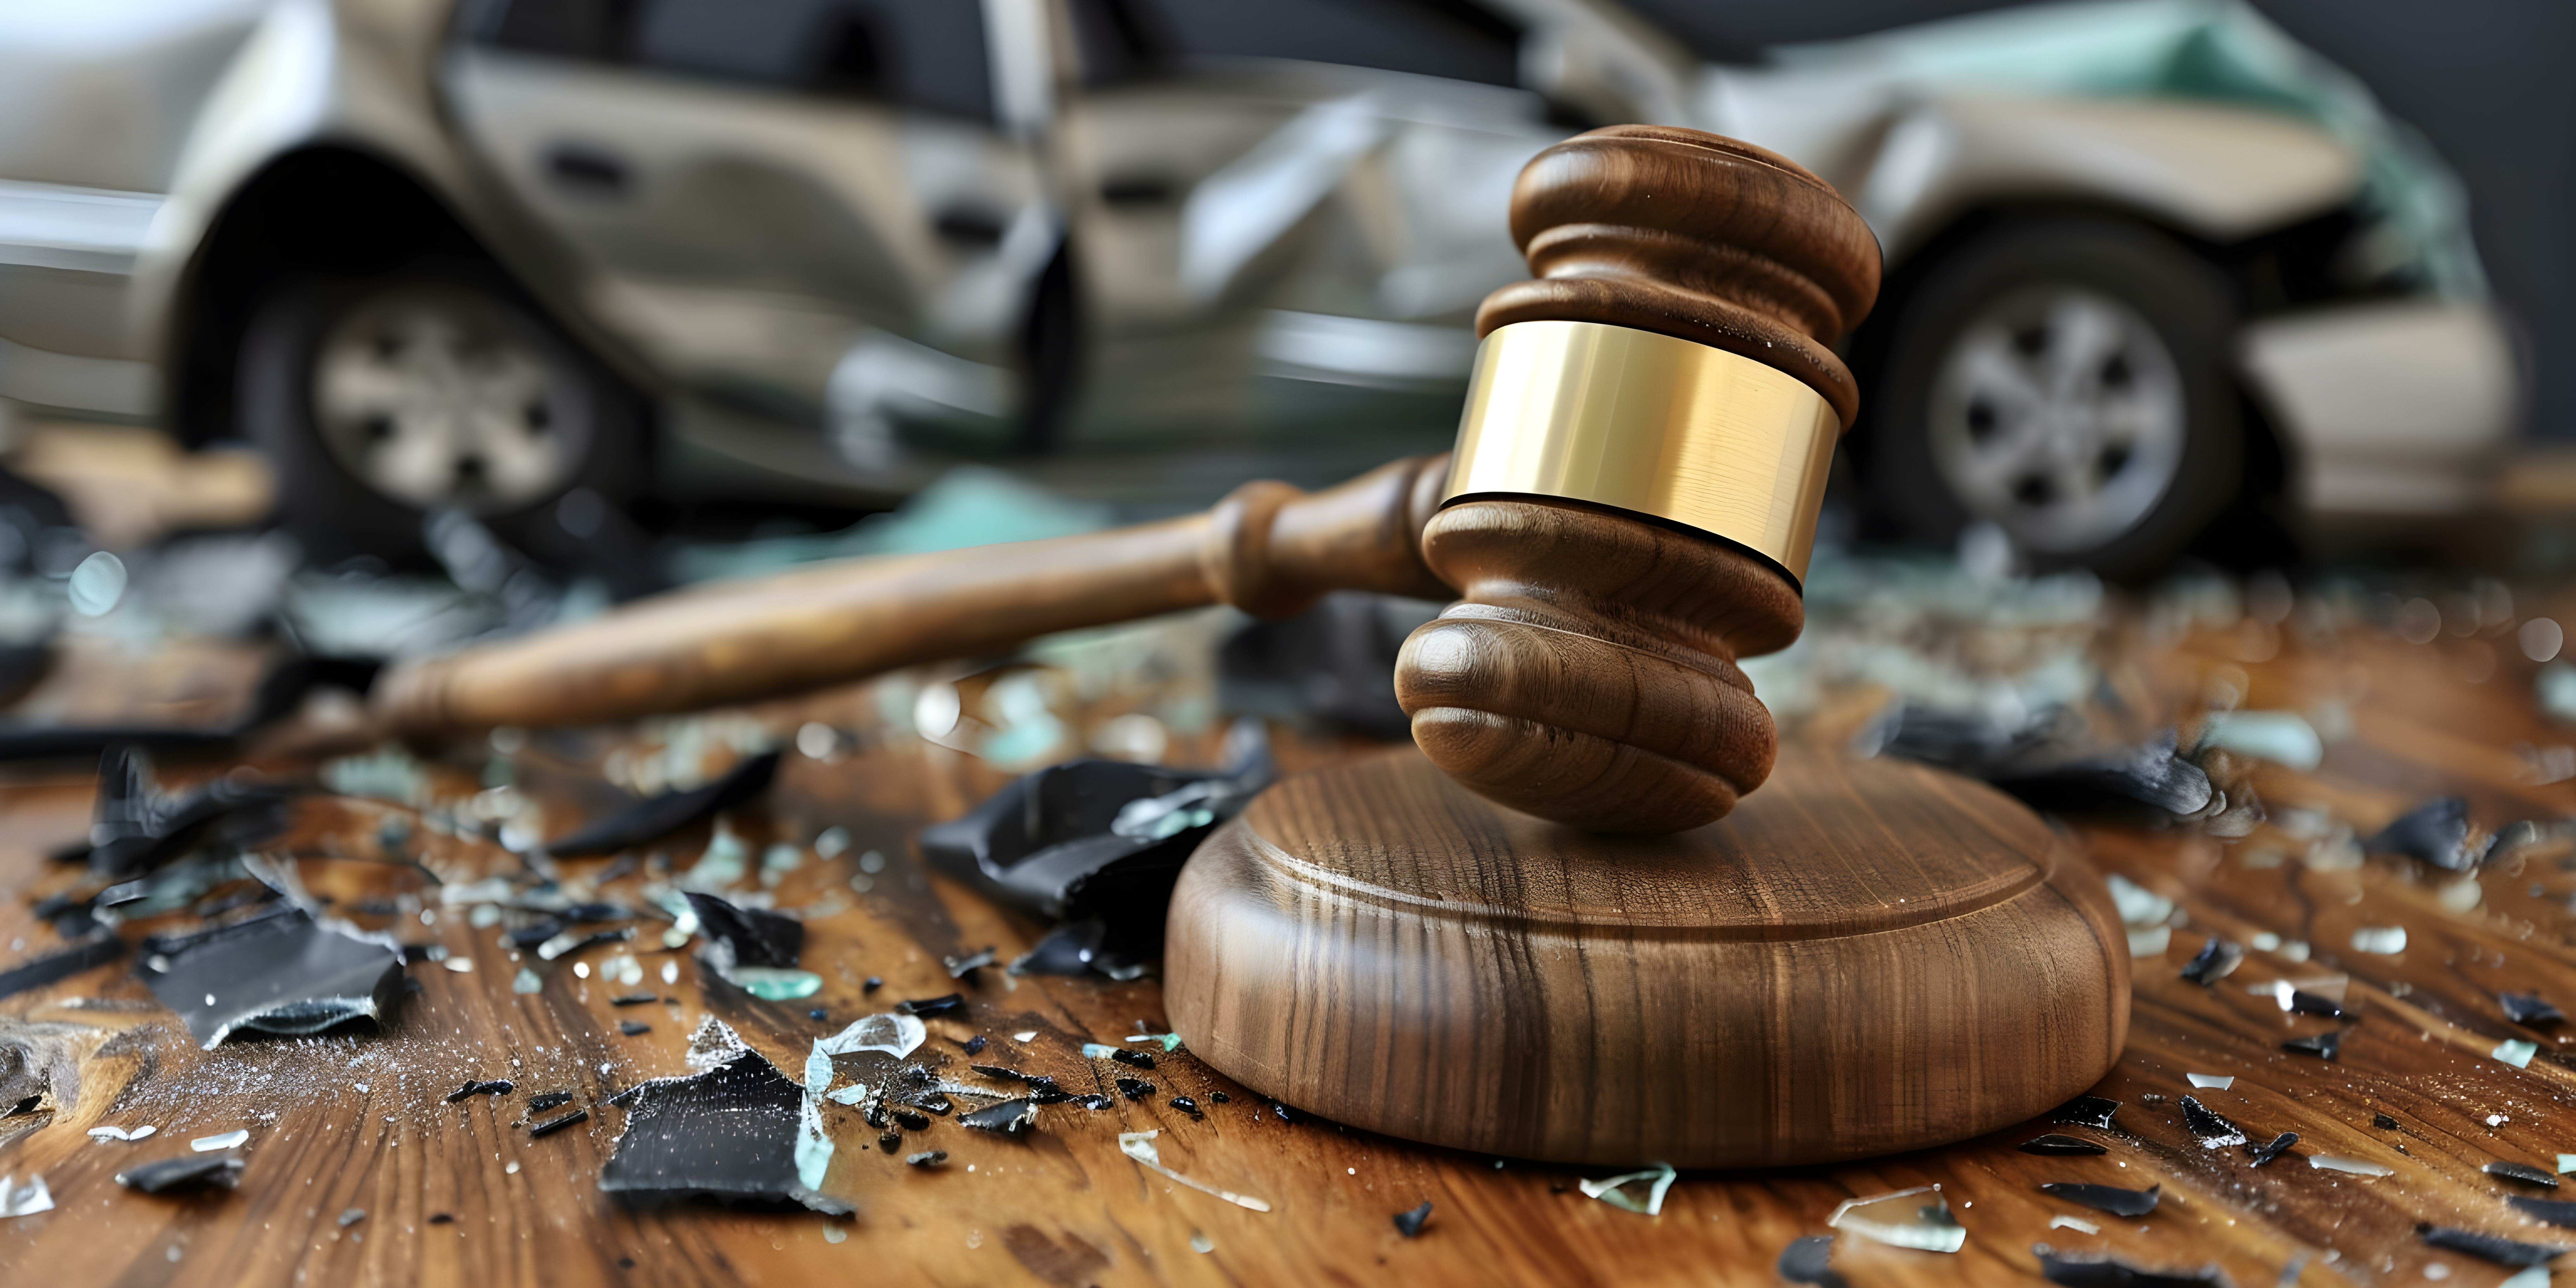 Car Wreck lawyer settlement auburn opelika alabama